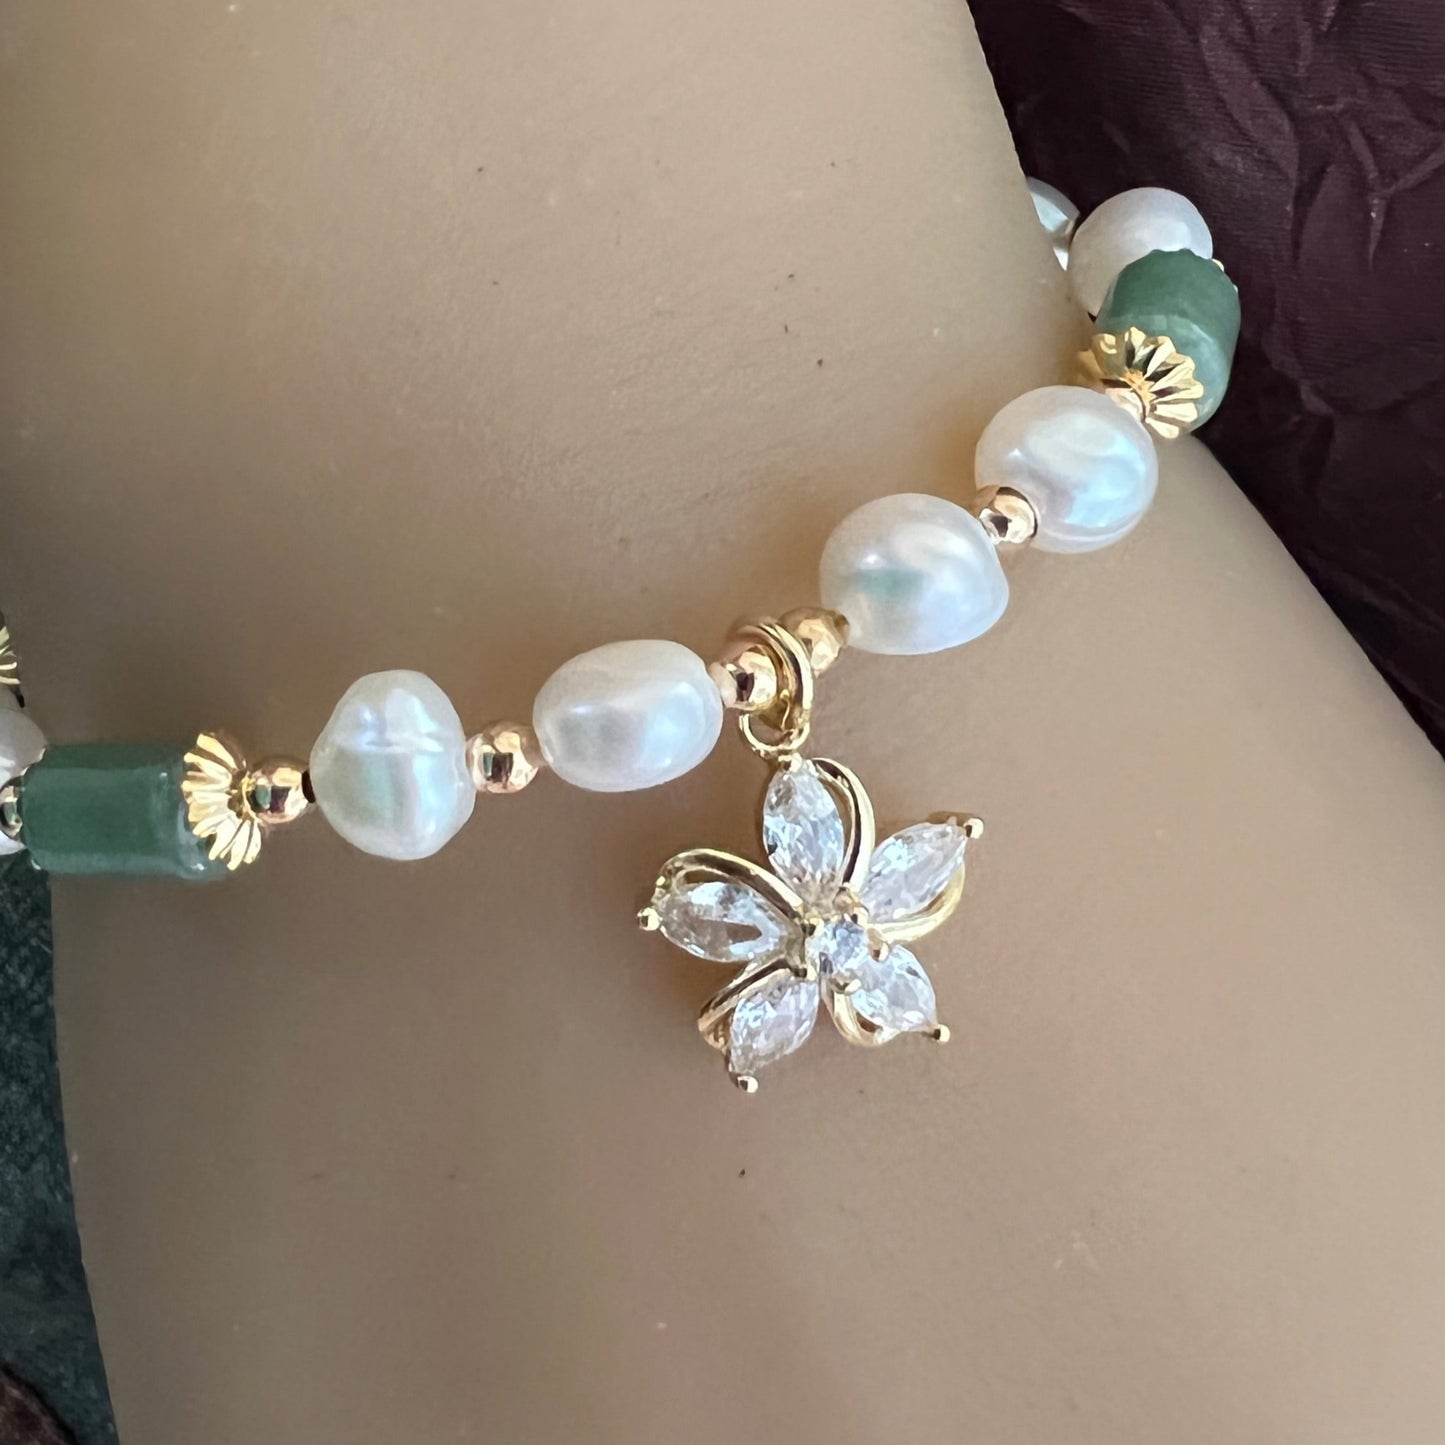 Charming Jade and Pearl Adjustable Bracelet